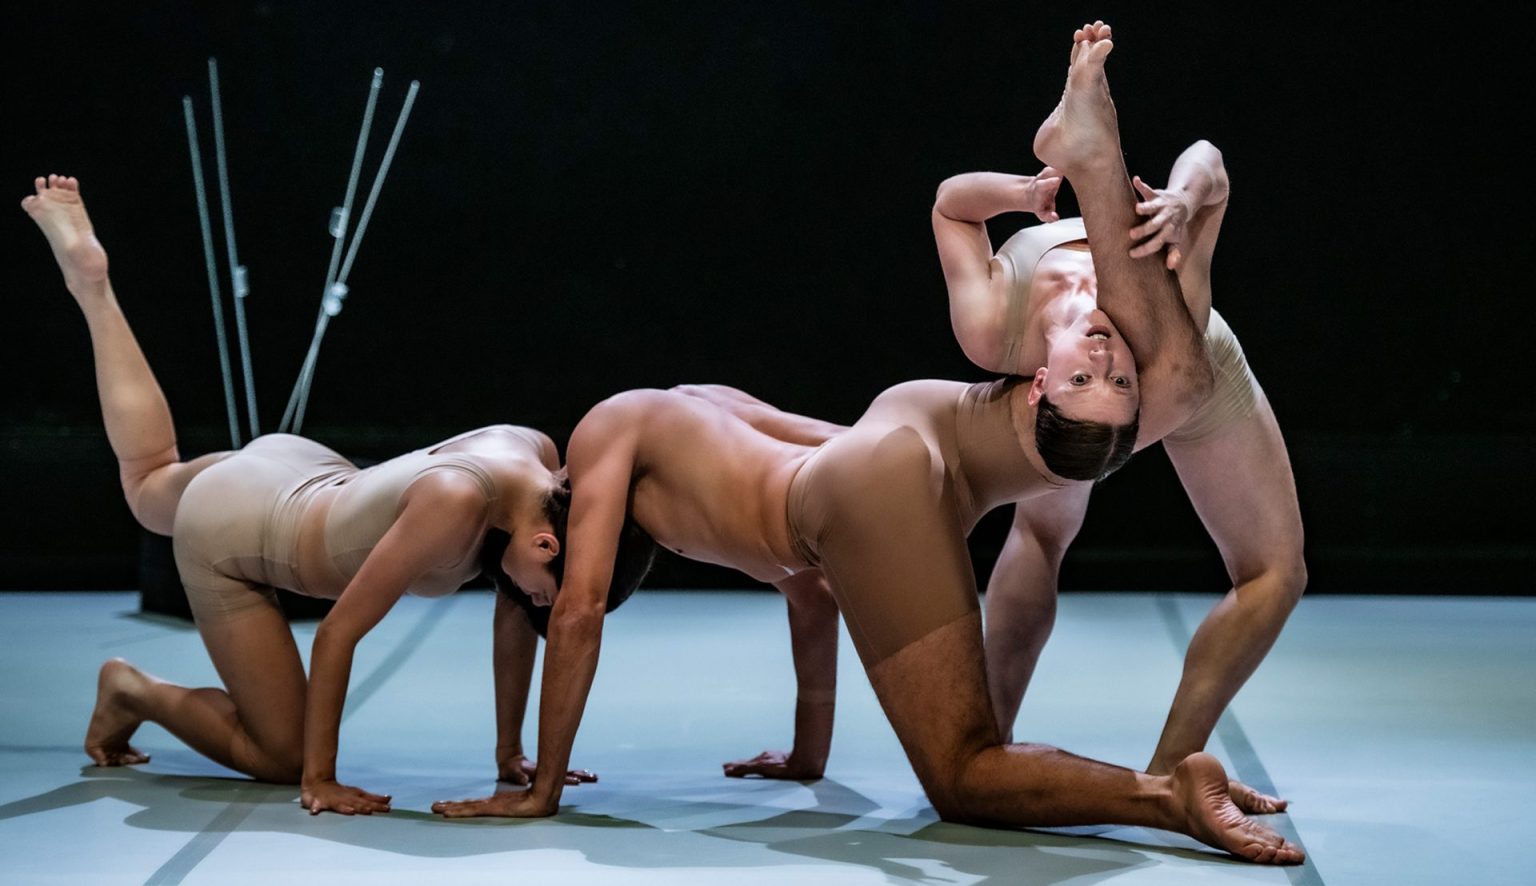 The performance “Techno Fauna” - part of Move Your Mind Festival 2022 at the dance theater Bora Bora